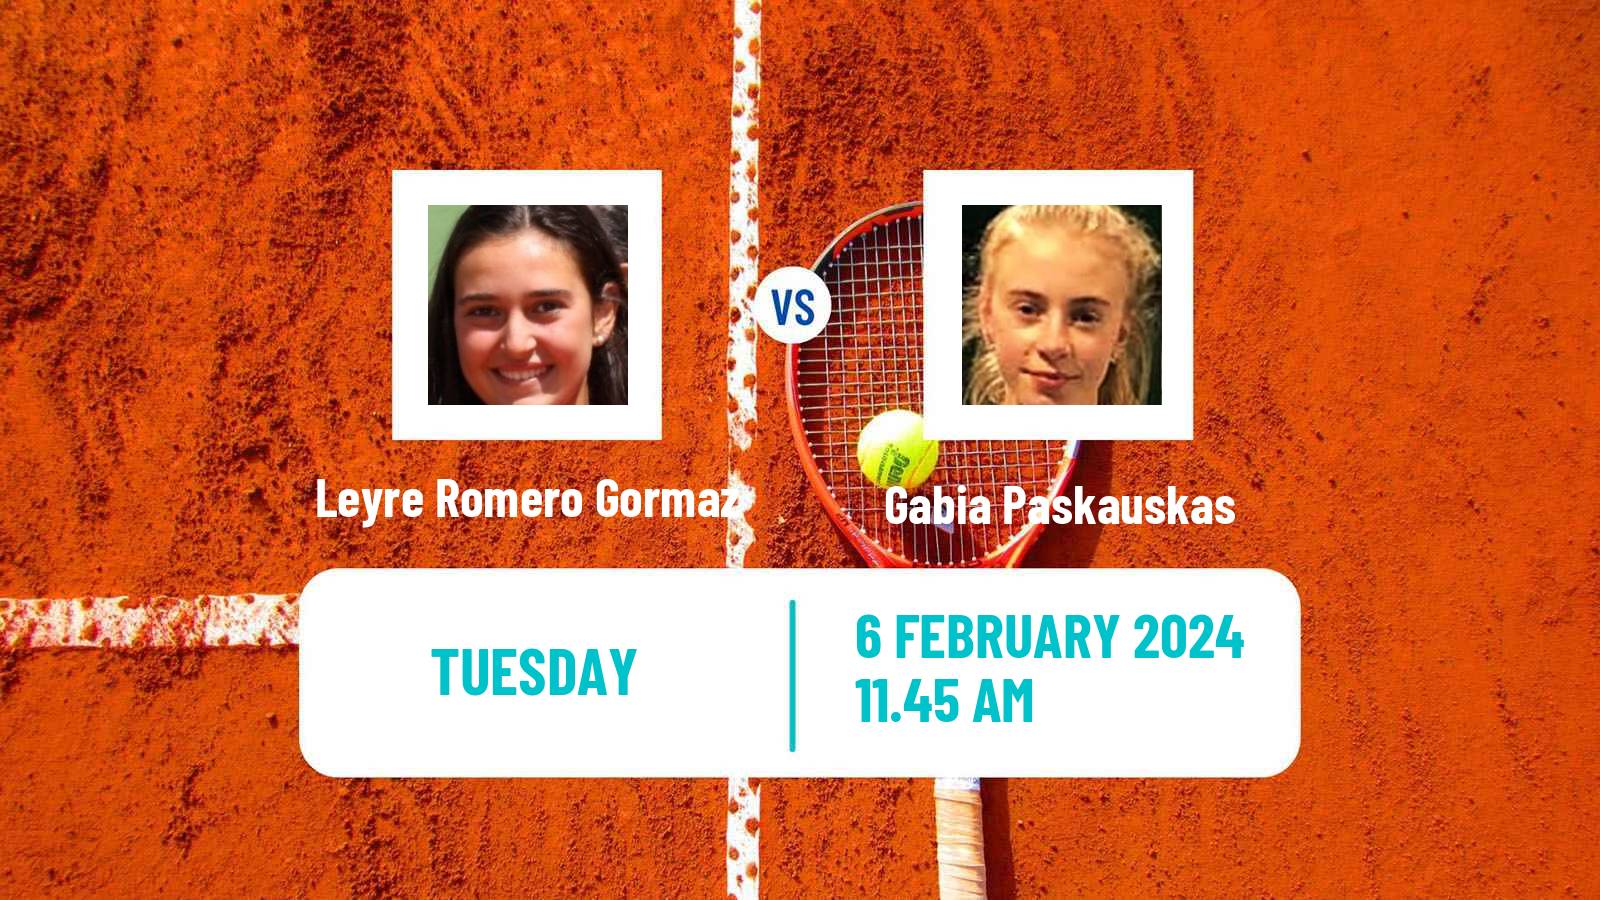 Tennis ITF W50 Edgbaston Women Leyre Romero Gormaz - Gabia Paskauskas